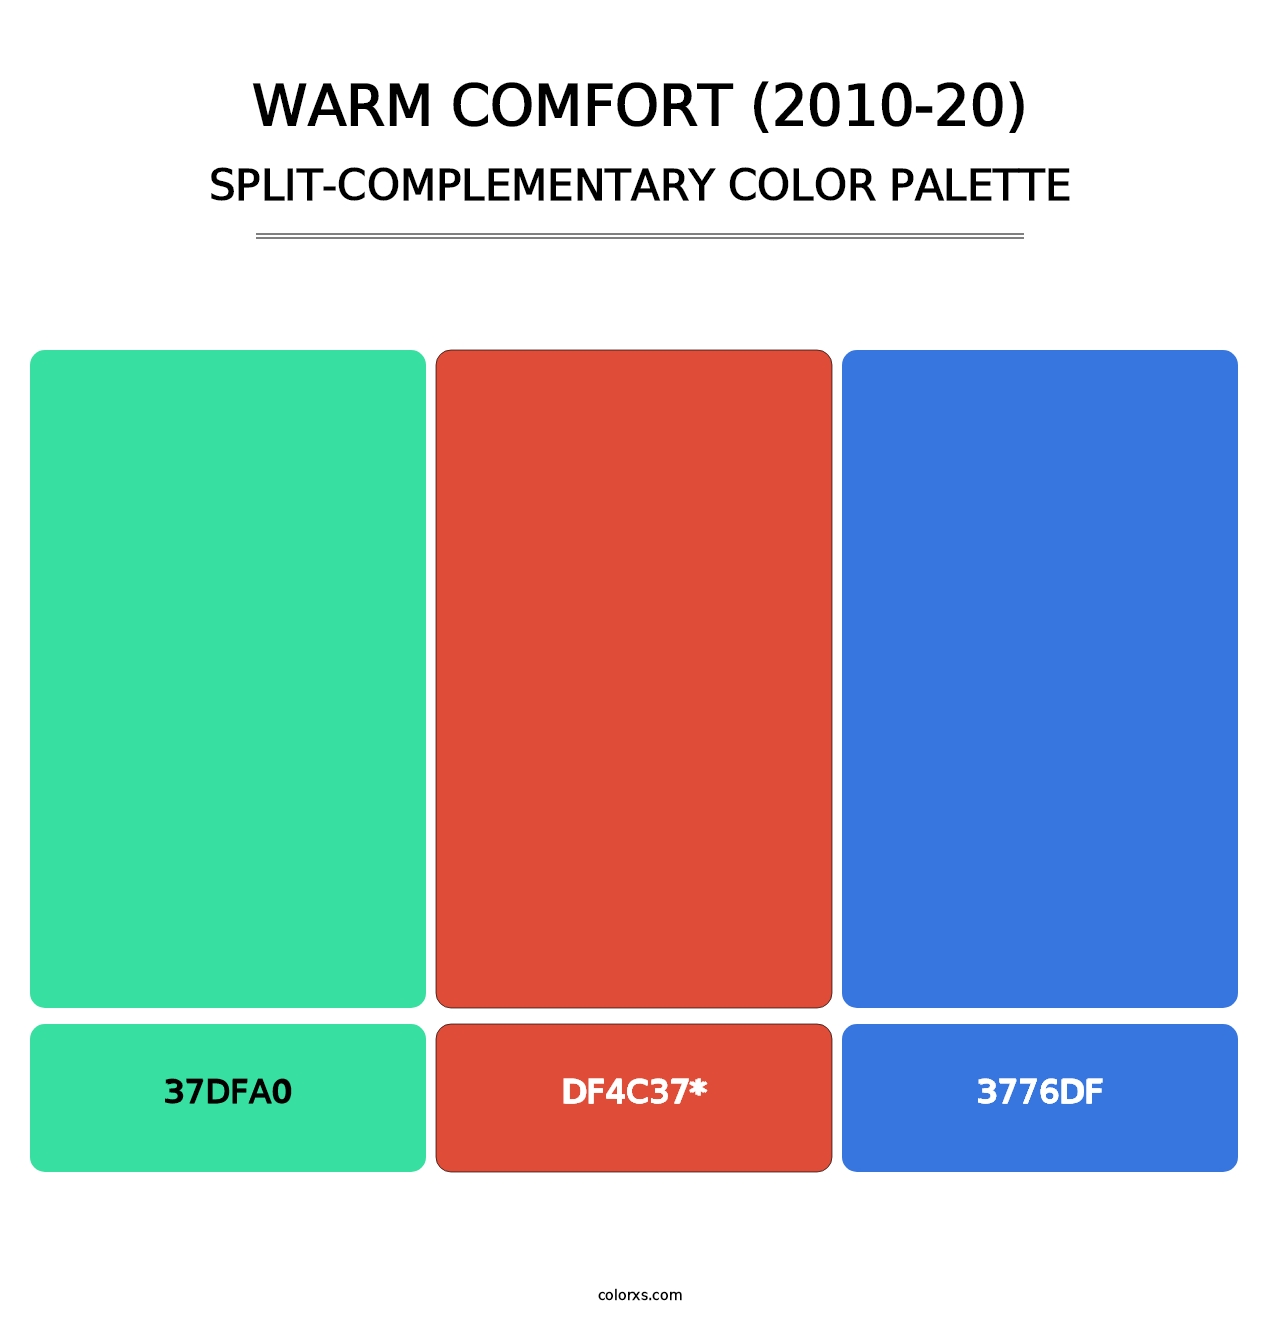 Warm Comfort (2010-20) - Split-Complementary Color Palette